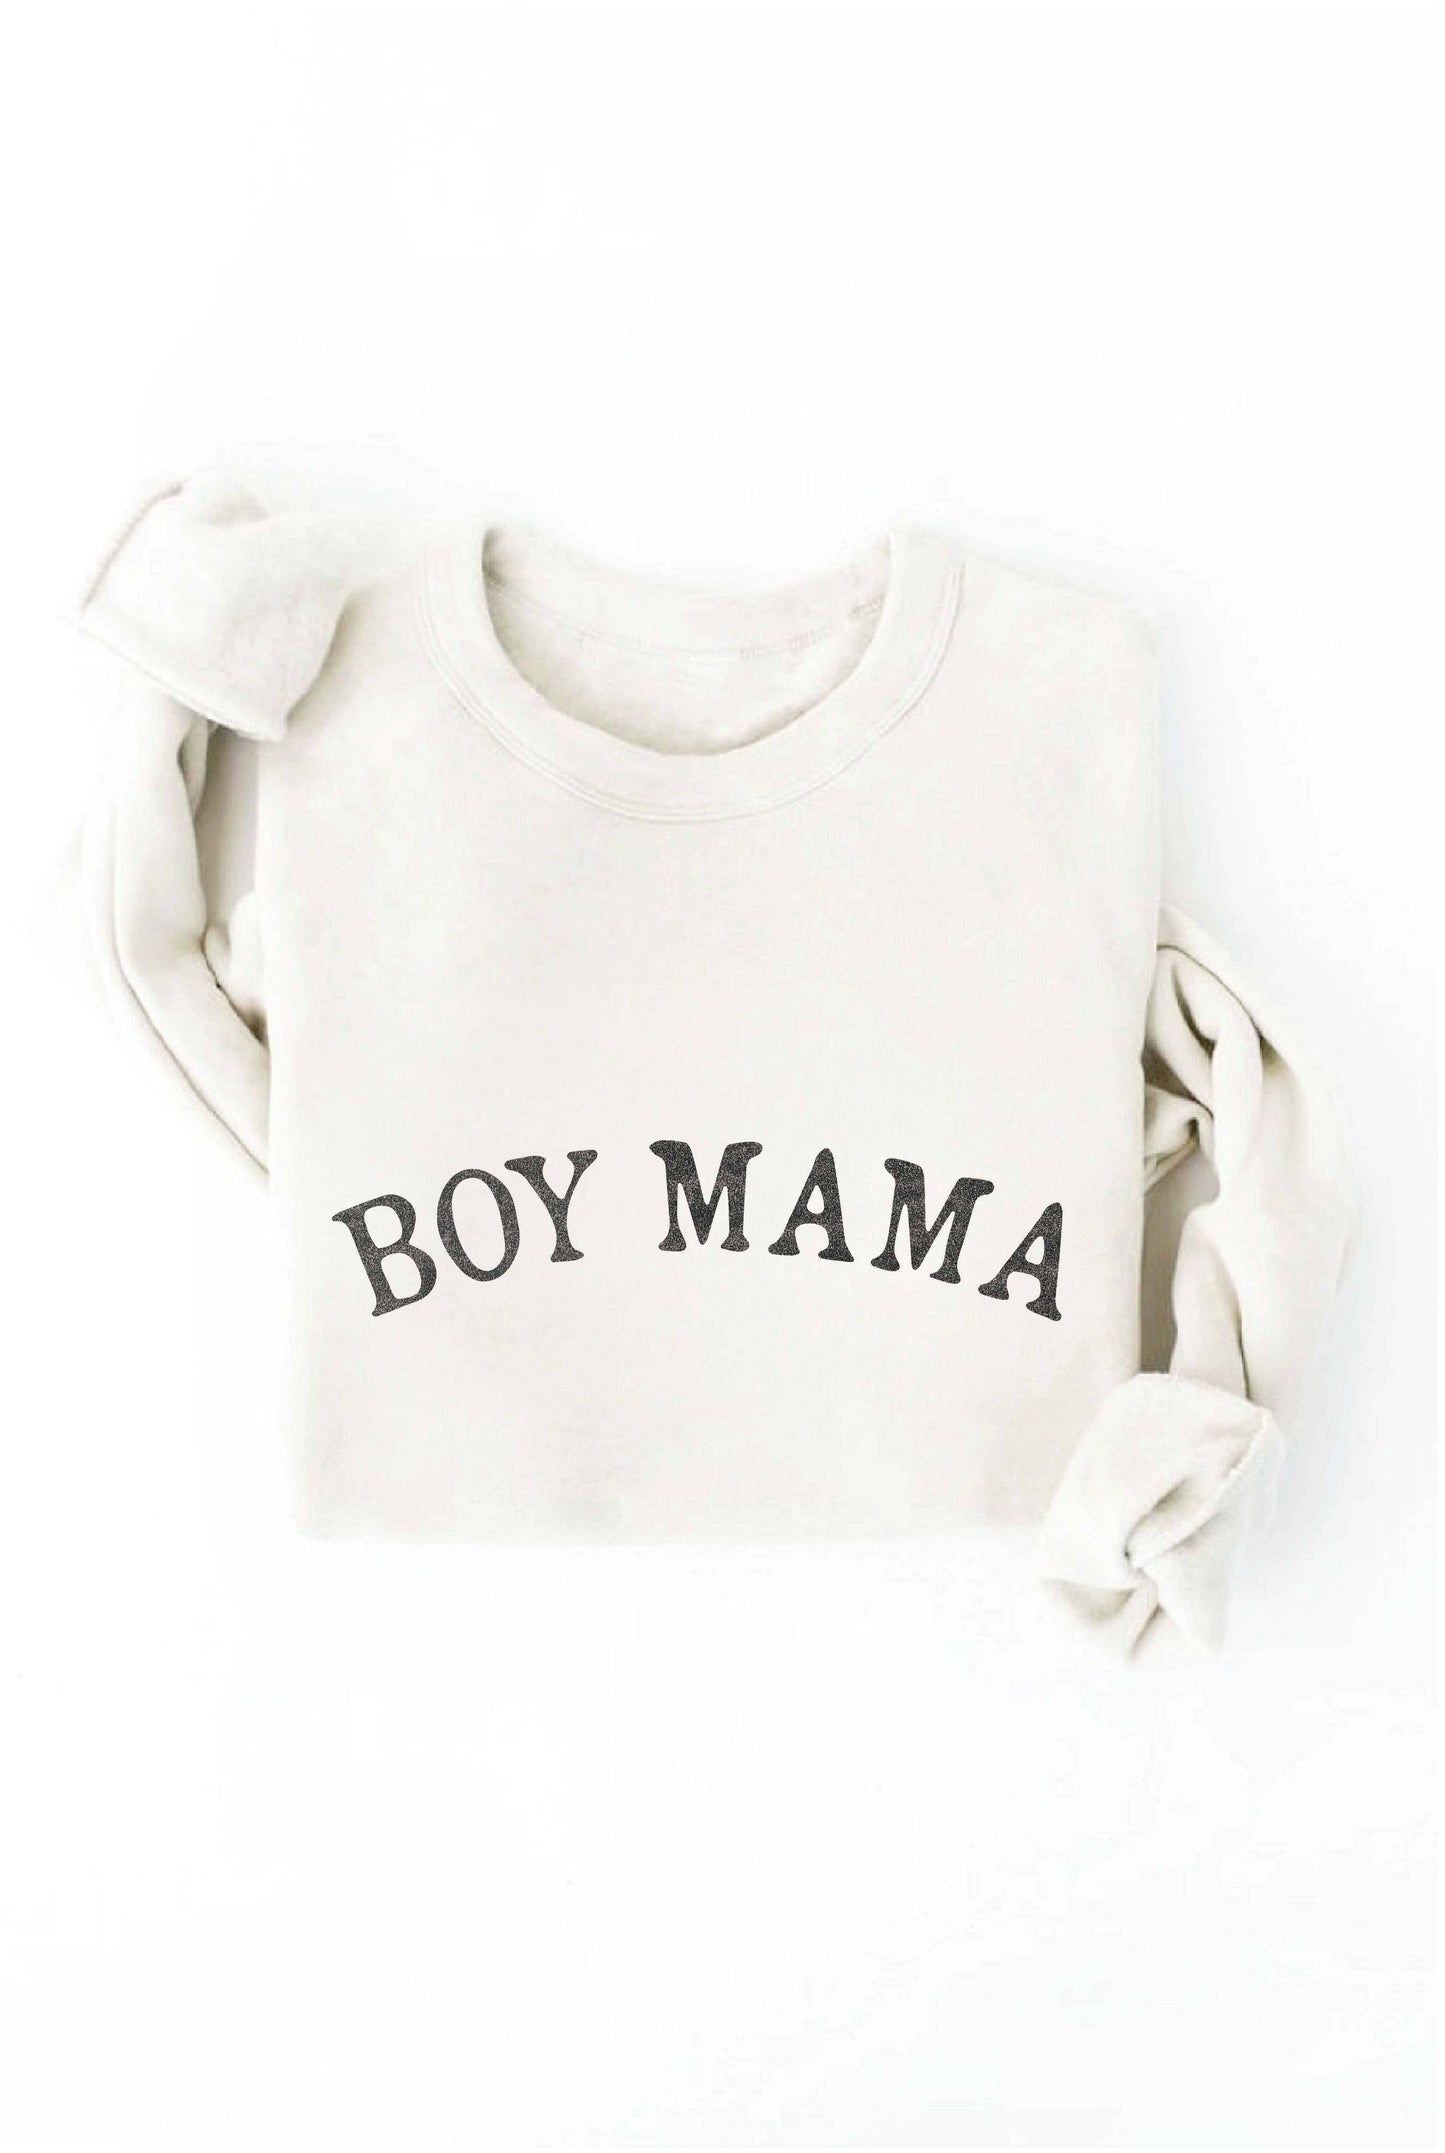 BOY MAMA Graphic Sweatshirt: XL / HEATHER DUST